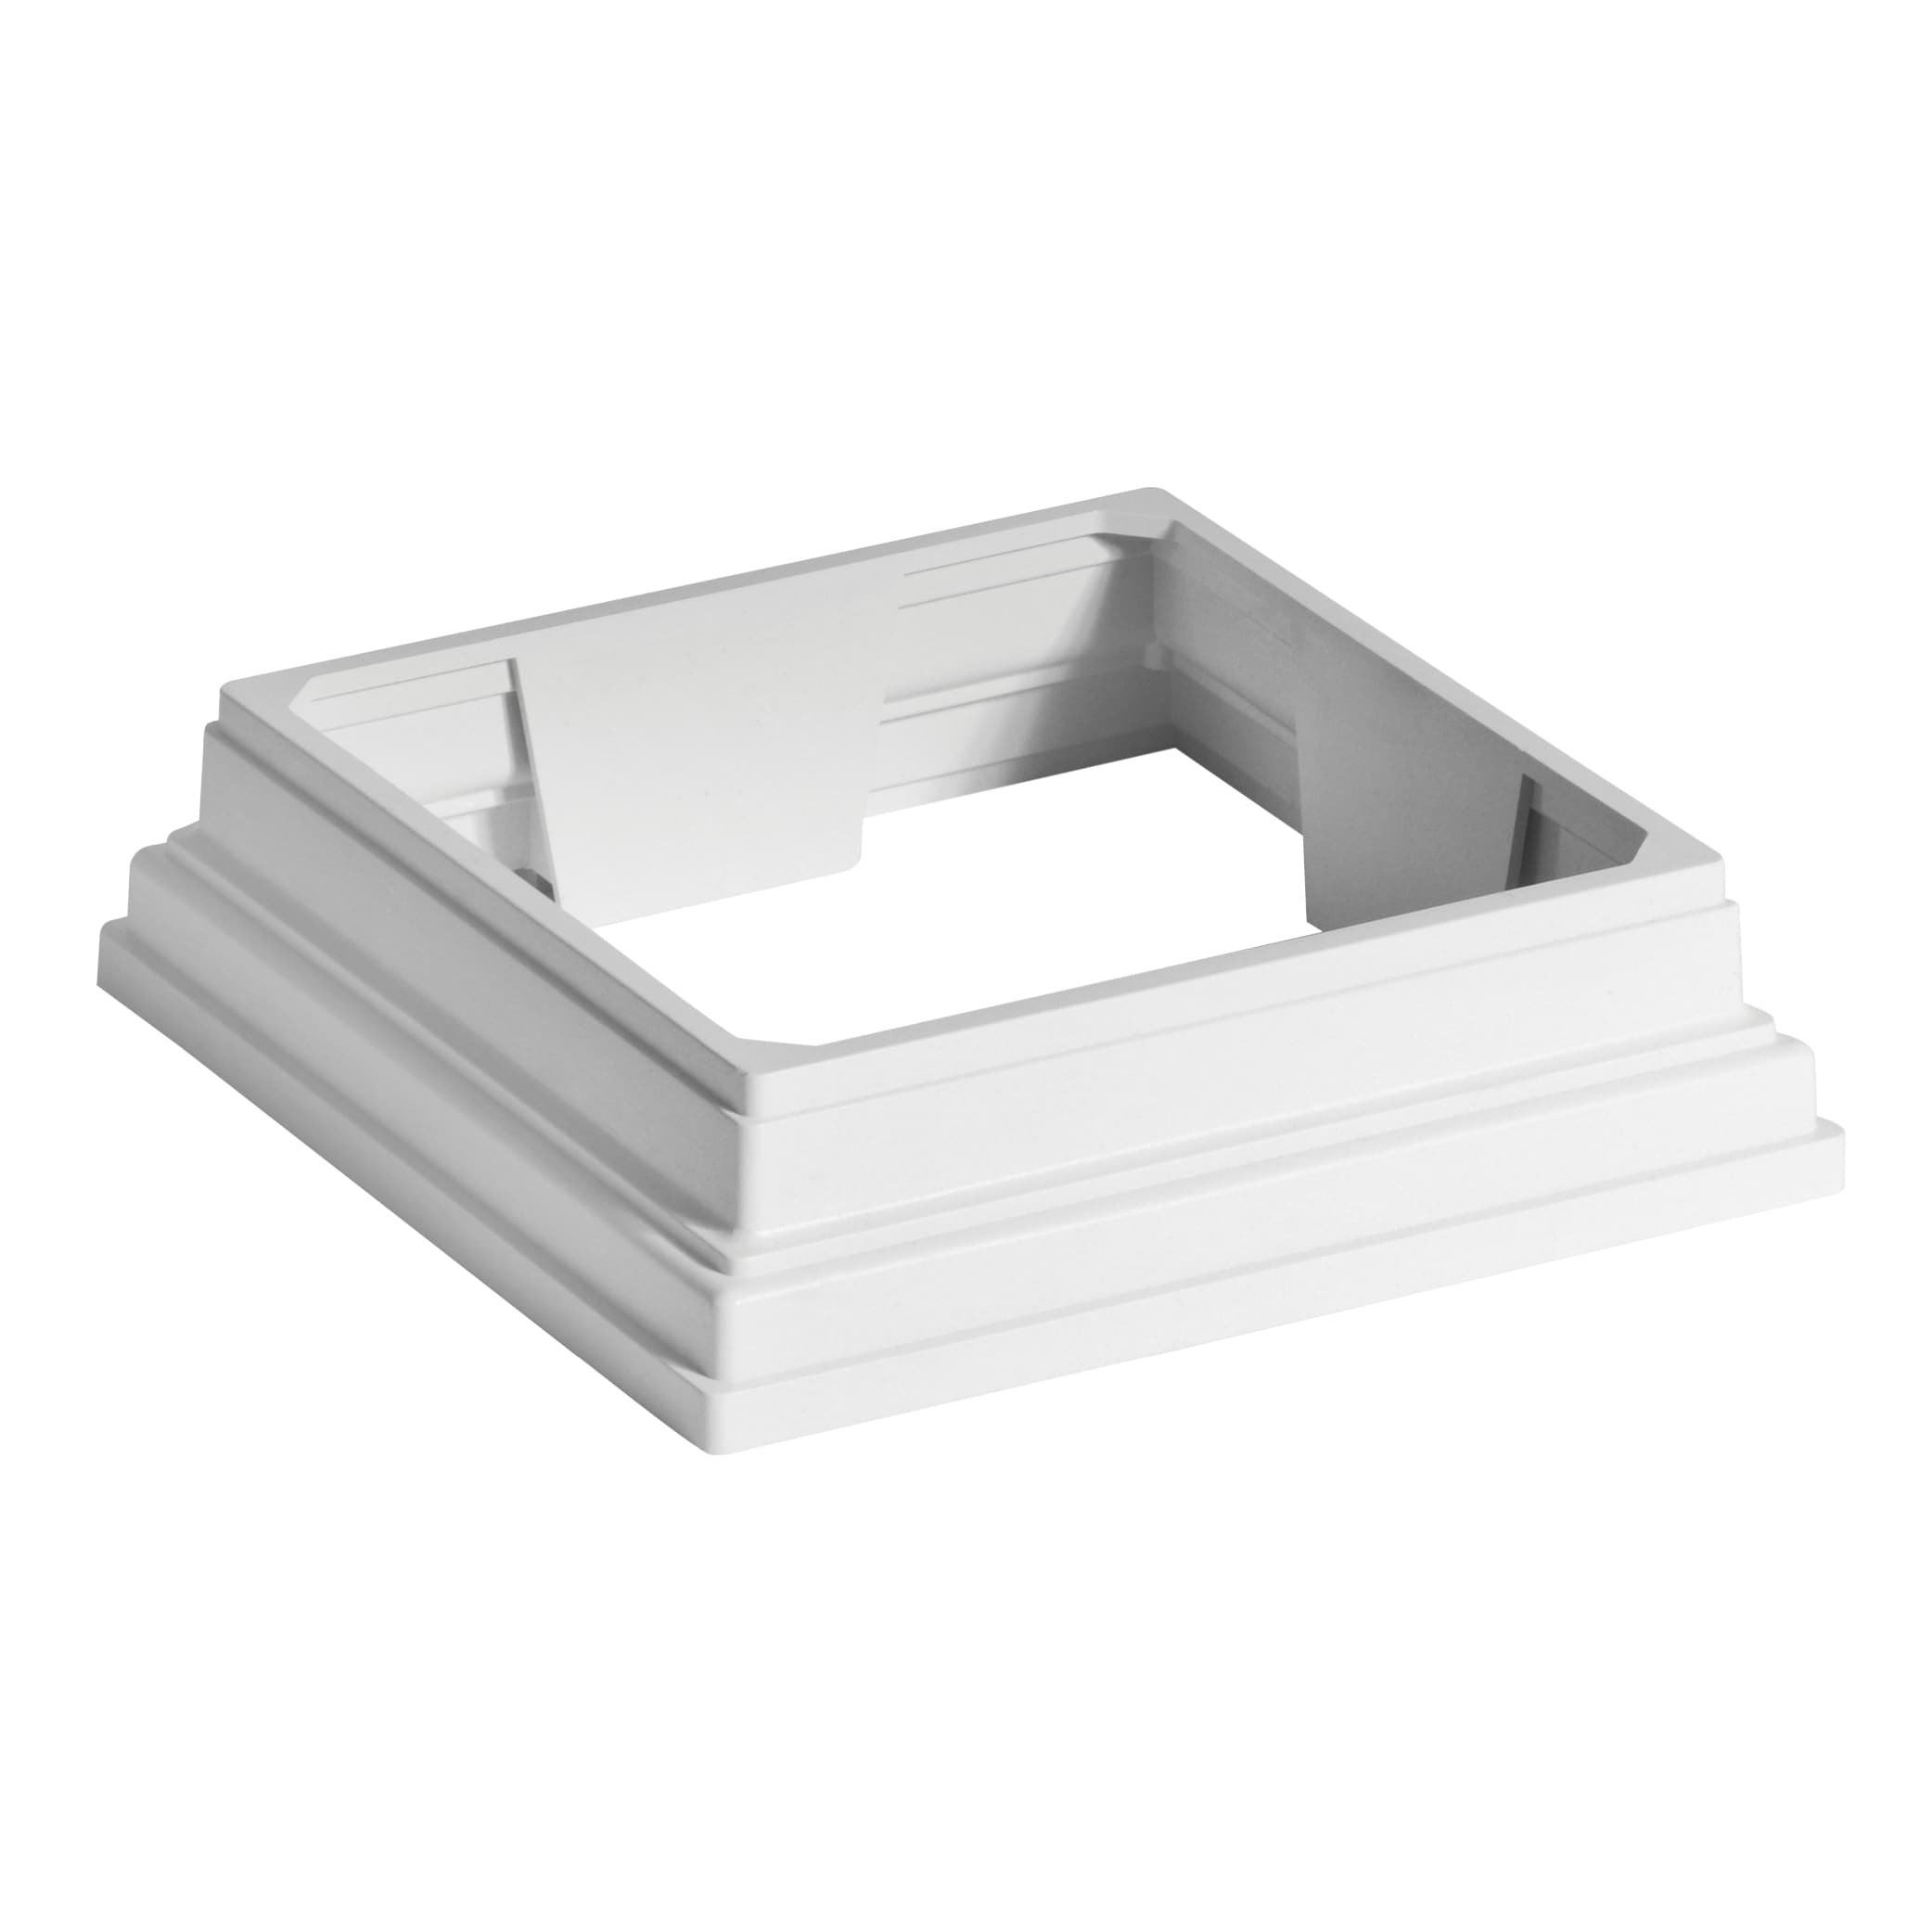 Trex 4-in x 4-in Classic White Composite Deck Post Base Trim in 